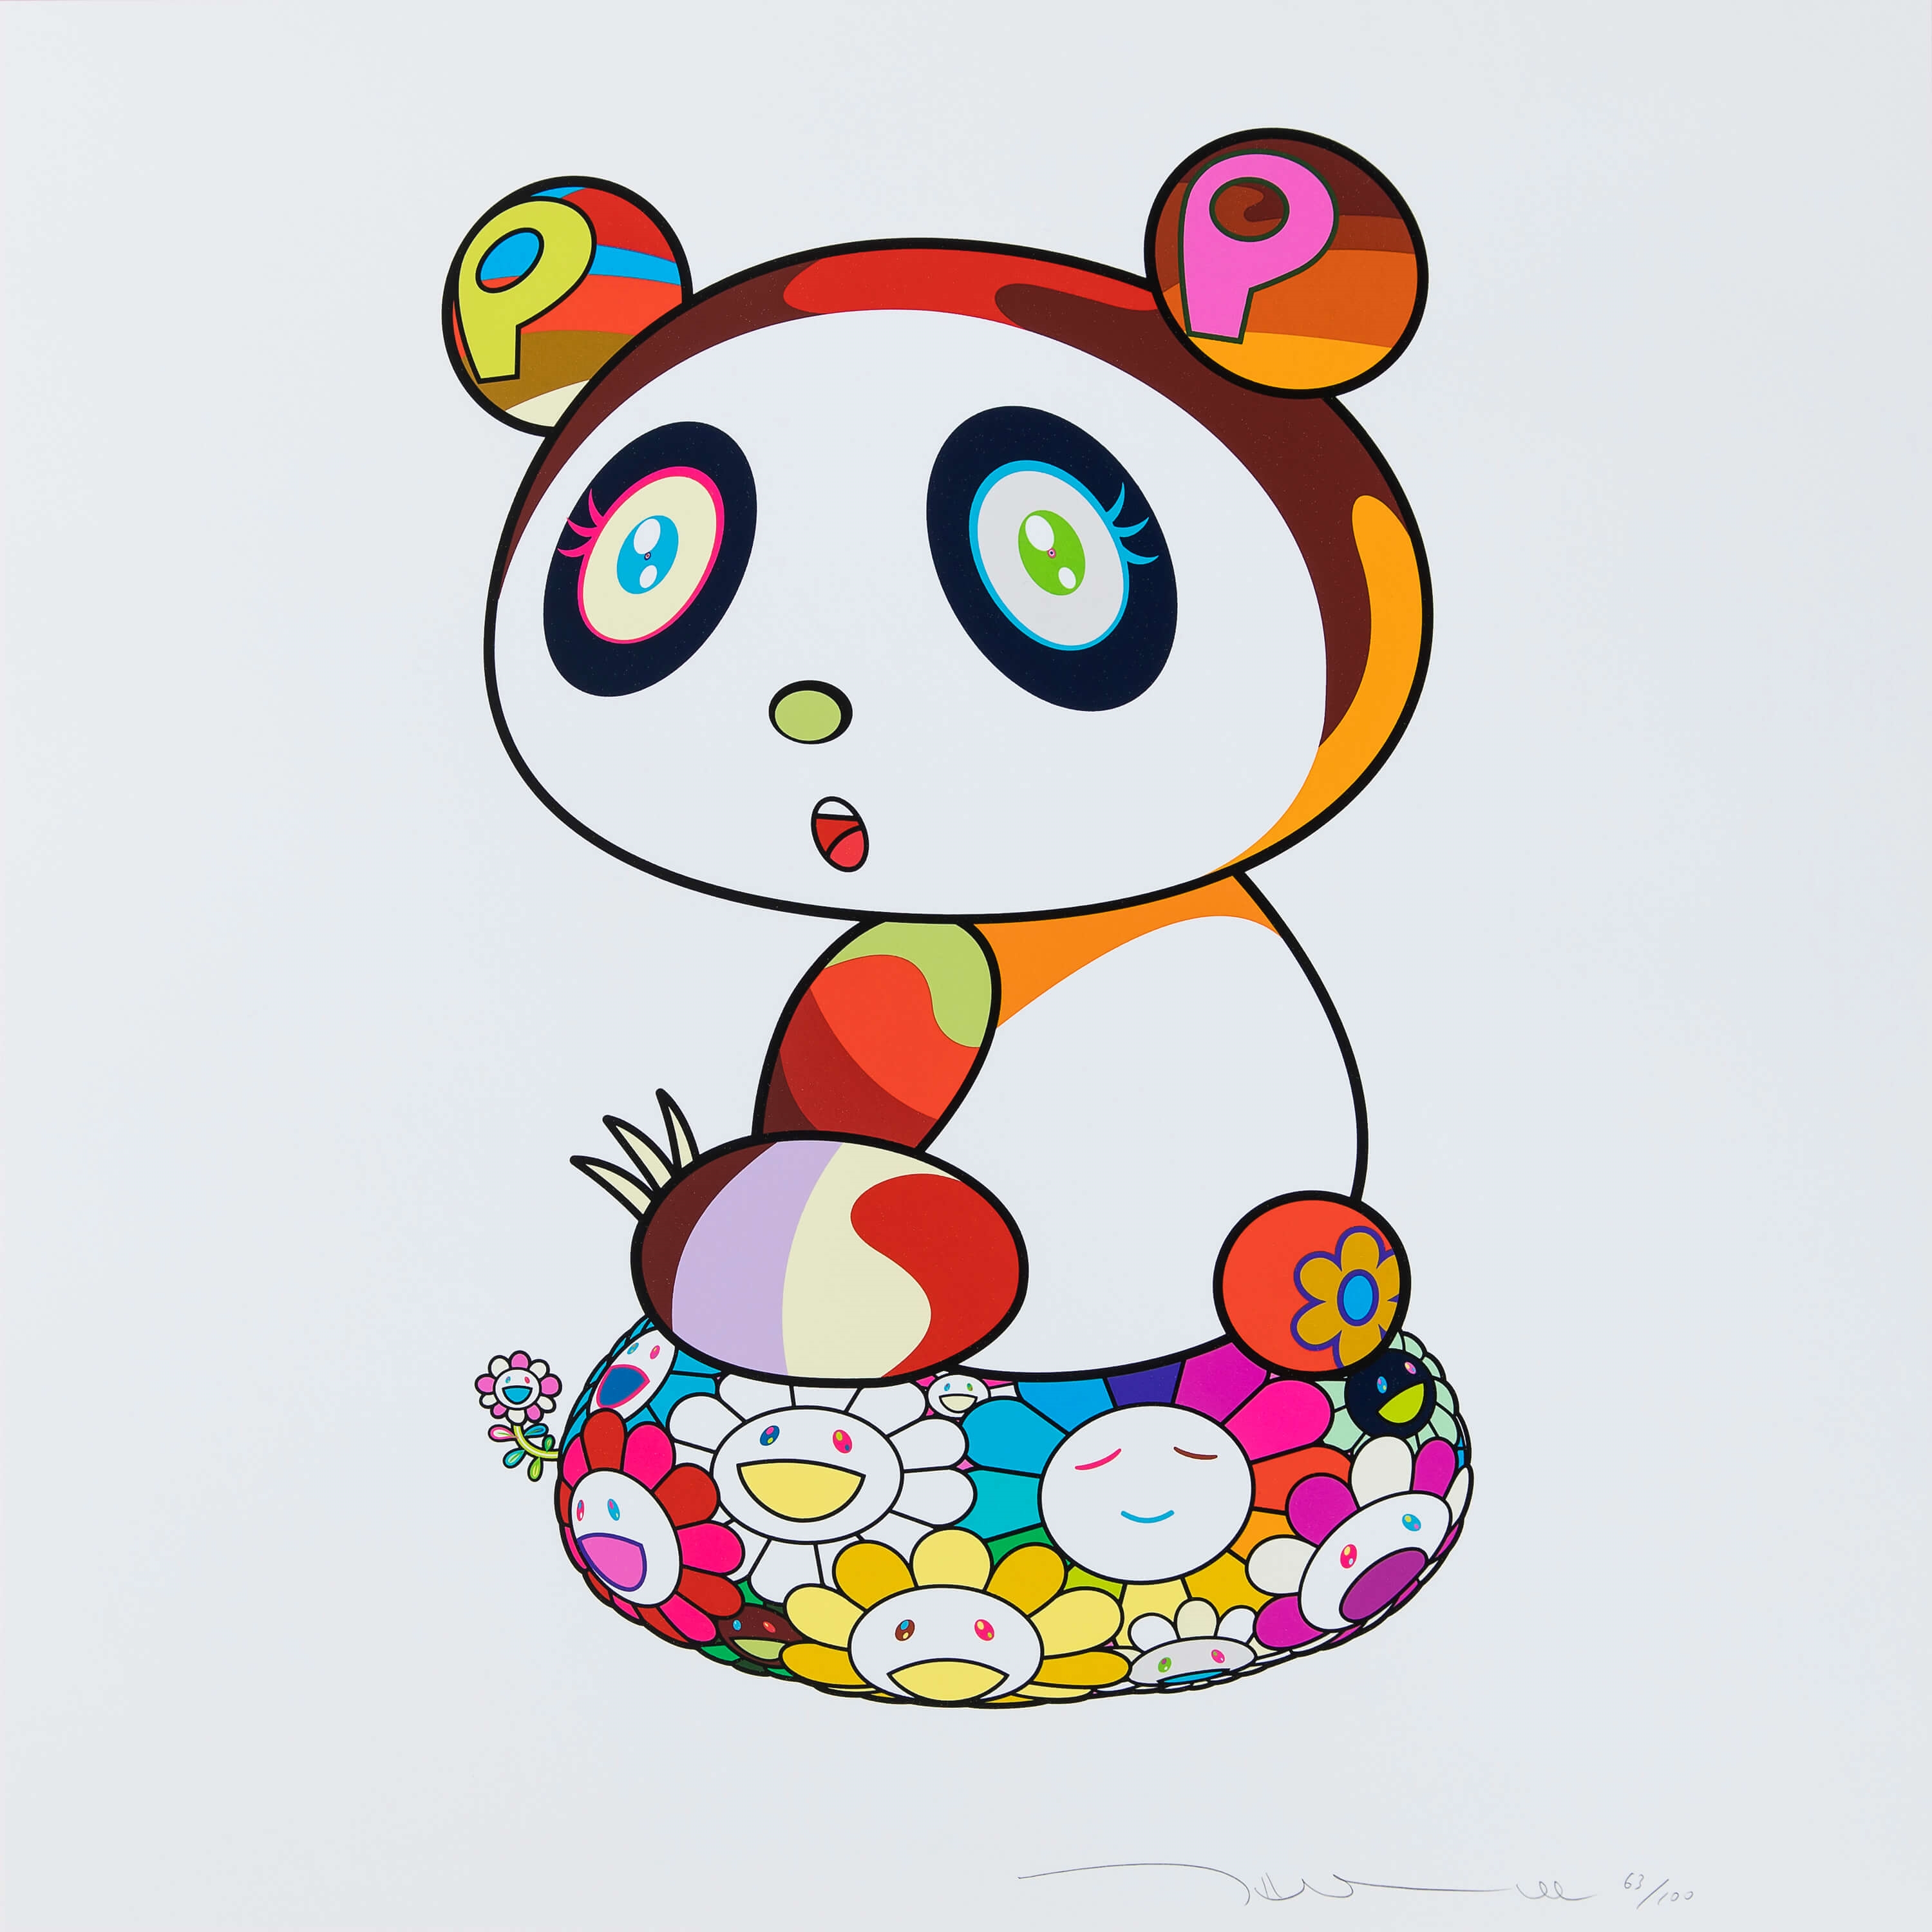 Takashi Murakami Panda-chan Hoyoyo Zzzzz Print (Signed, Edition of